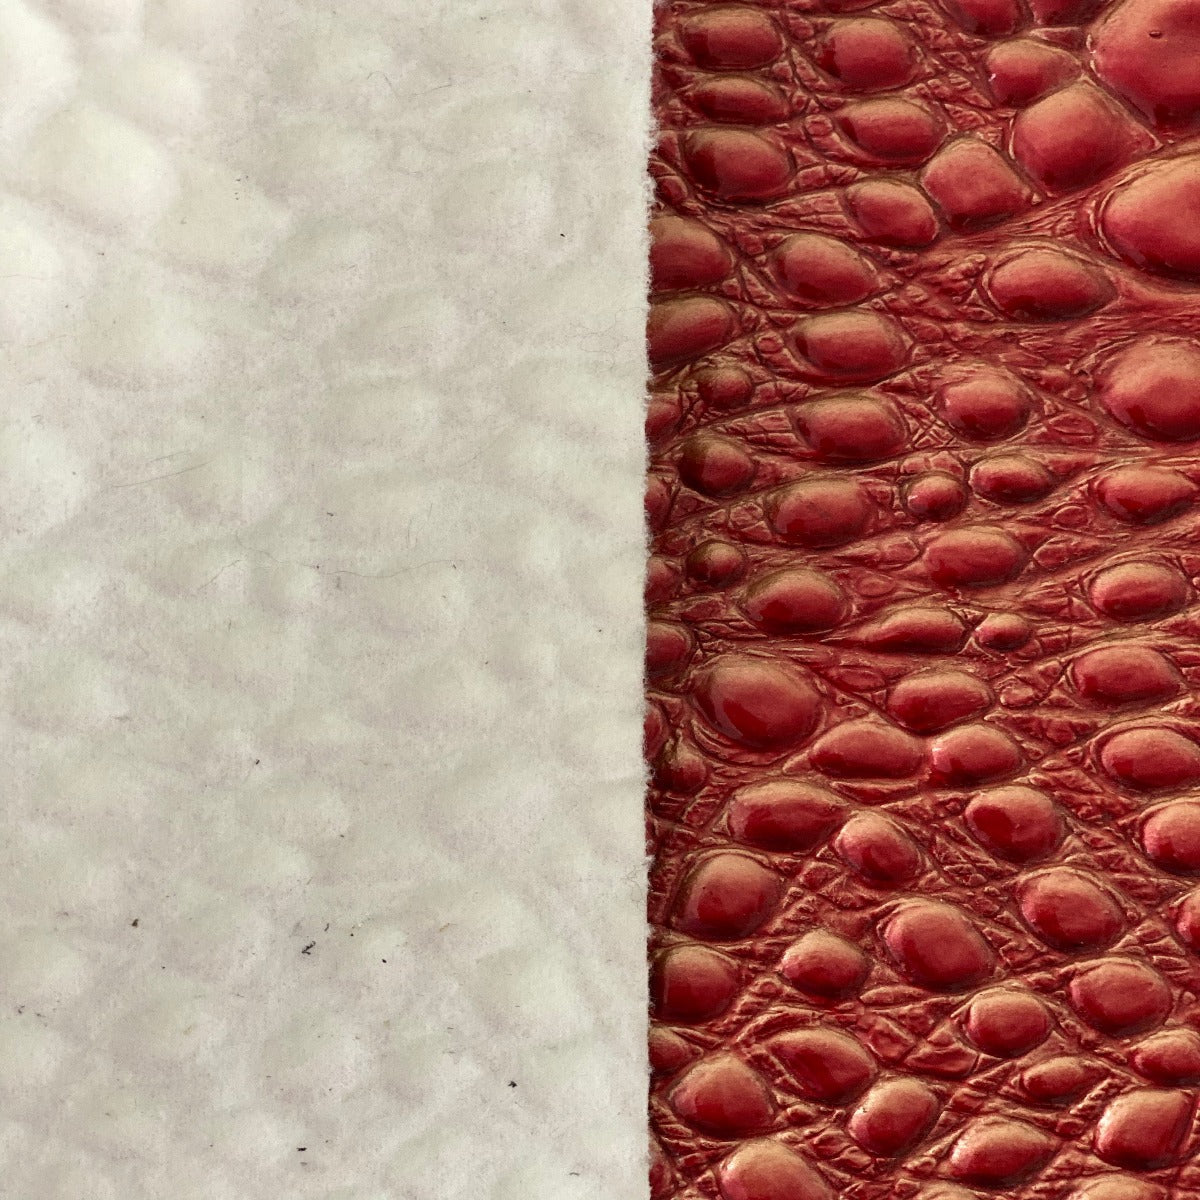 Red Gold Brickell Embossed Crocodile Vinyl Fabric - Fashion Fabrics Los Angeles 